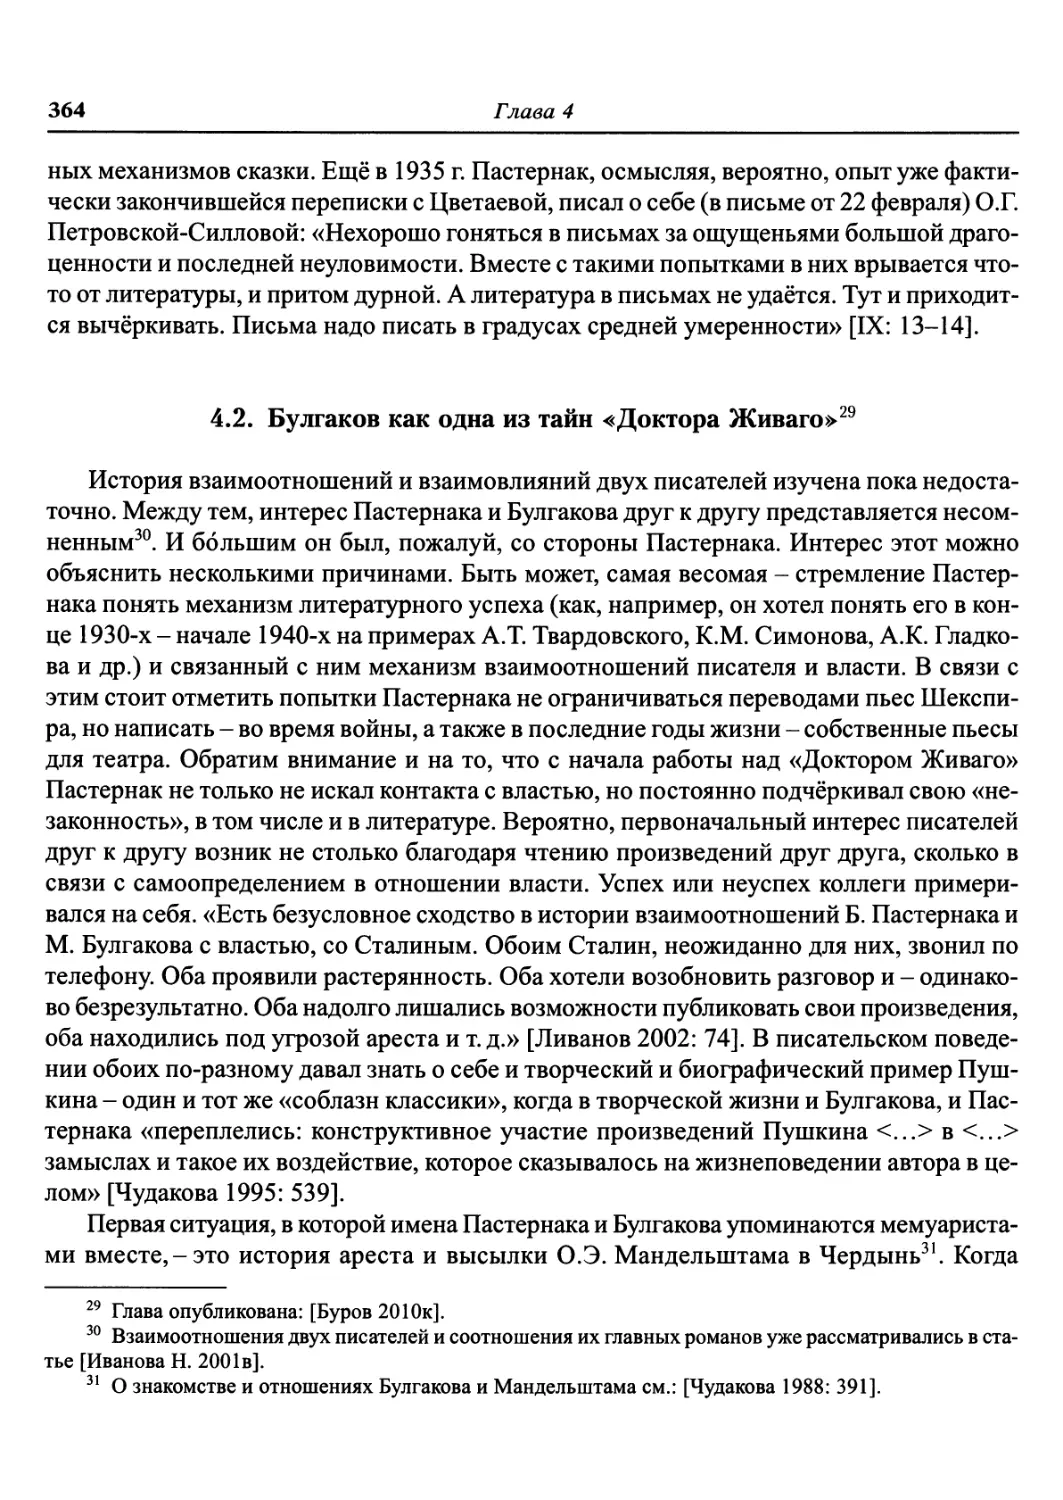 4.2. Булгаков как одна из тайн «Доктора Живаго»